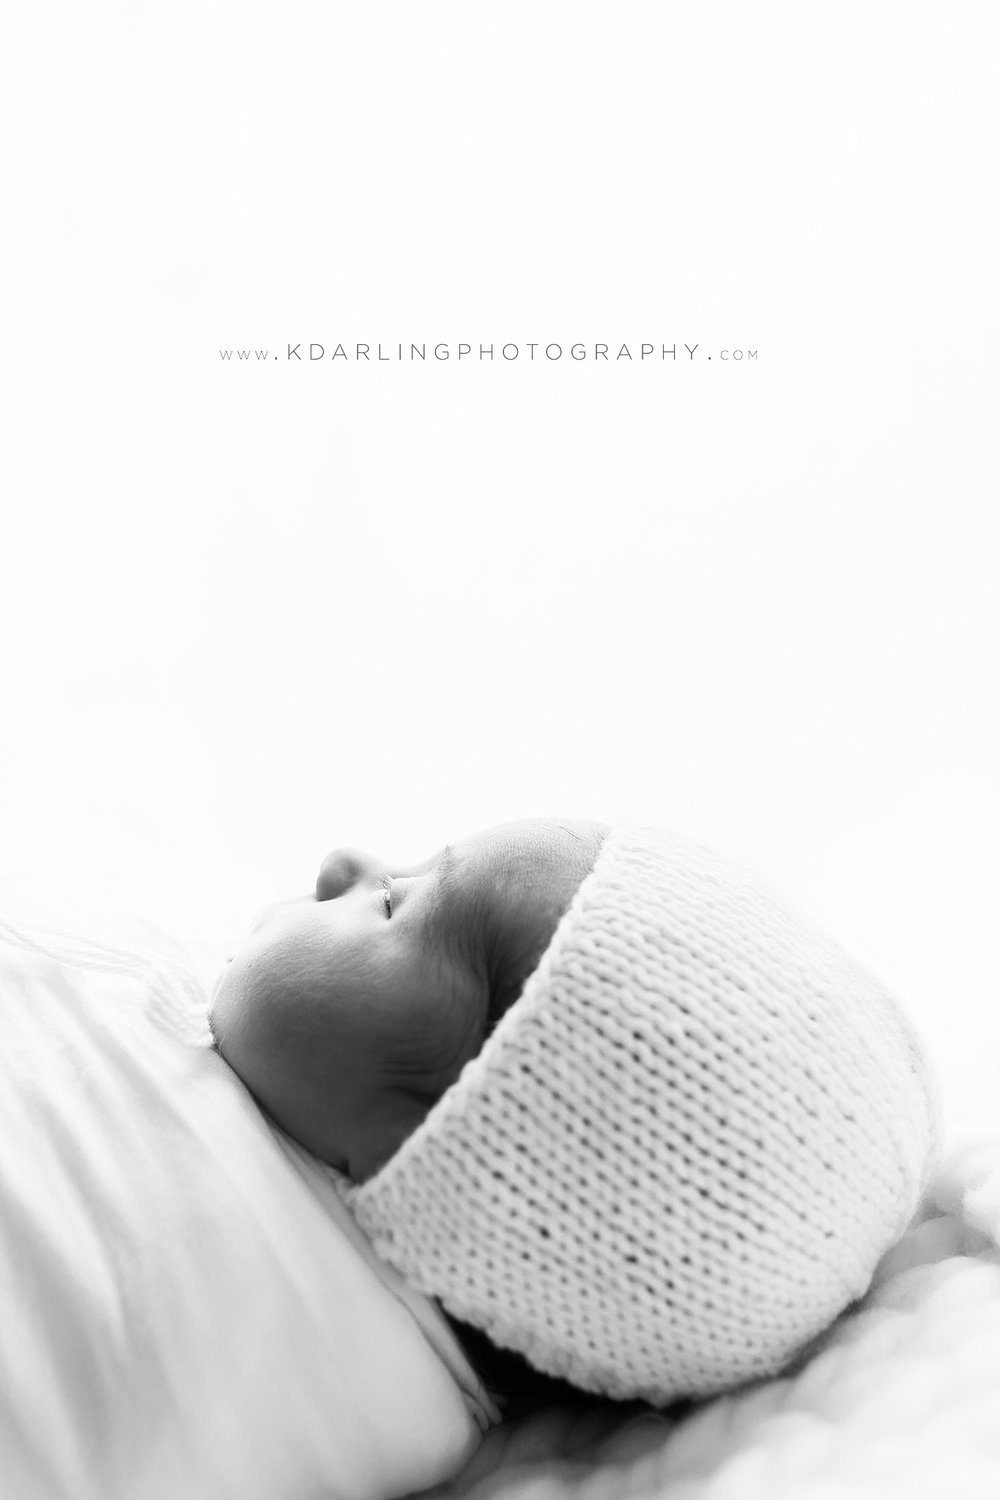 Backlit image of a newborn baby boy